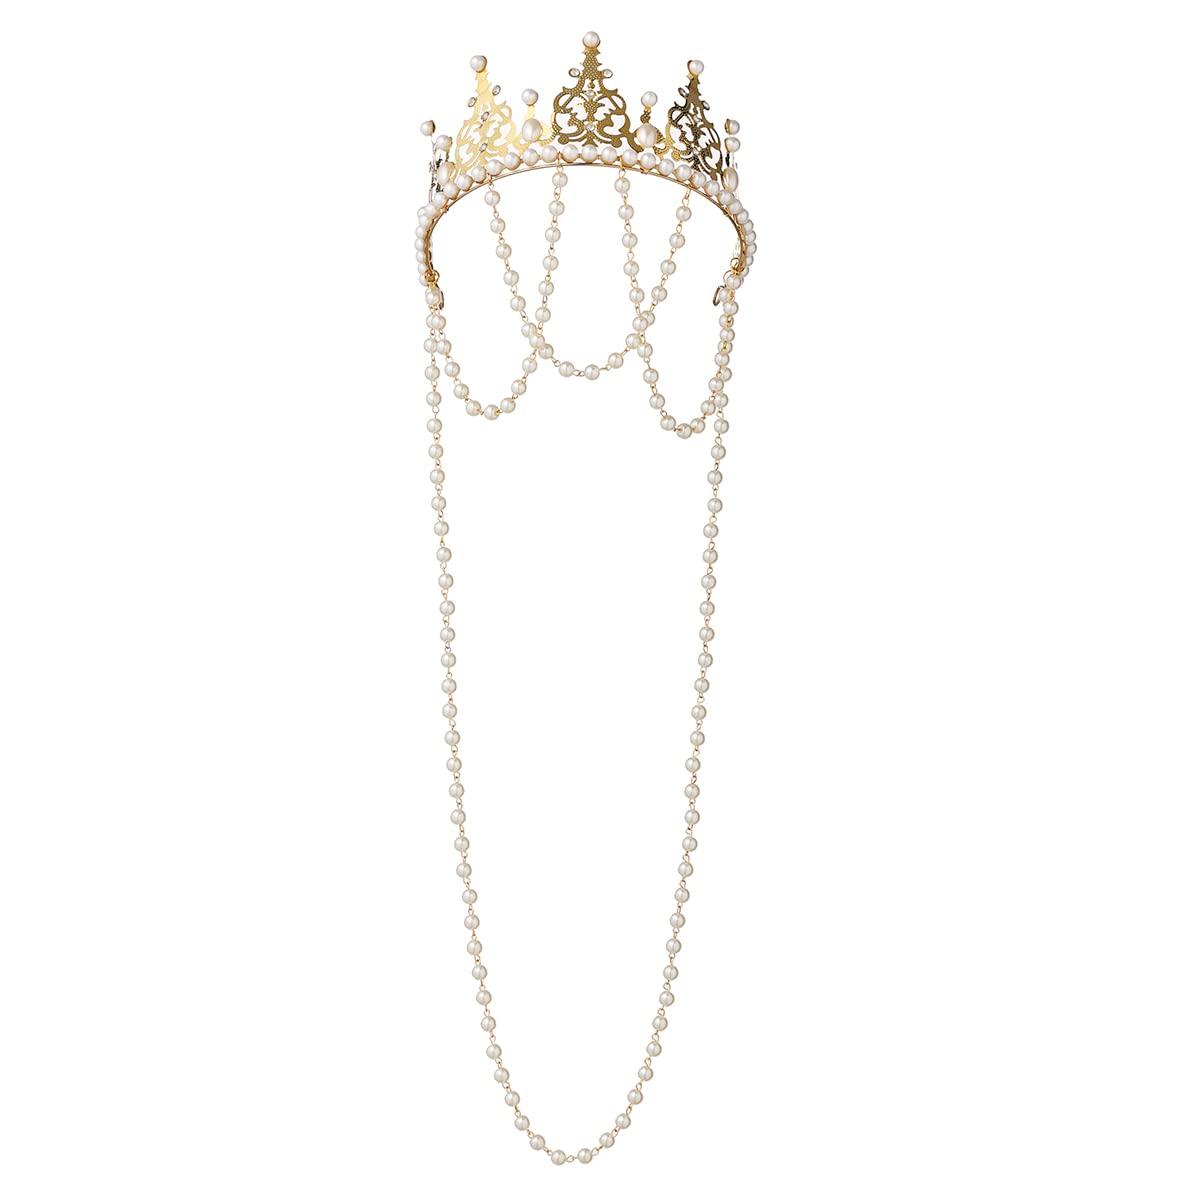 COSDREAMER Women Wedding Crown Tiara Baroque Queen Bead Chain Crown (Gold) (large, Plastic)